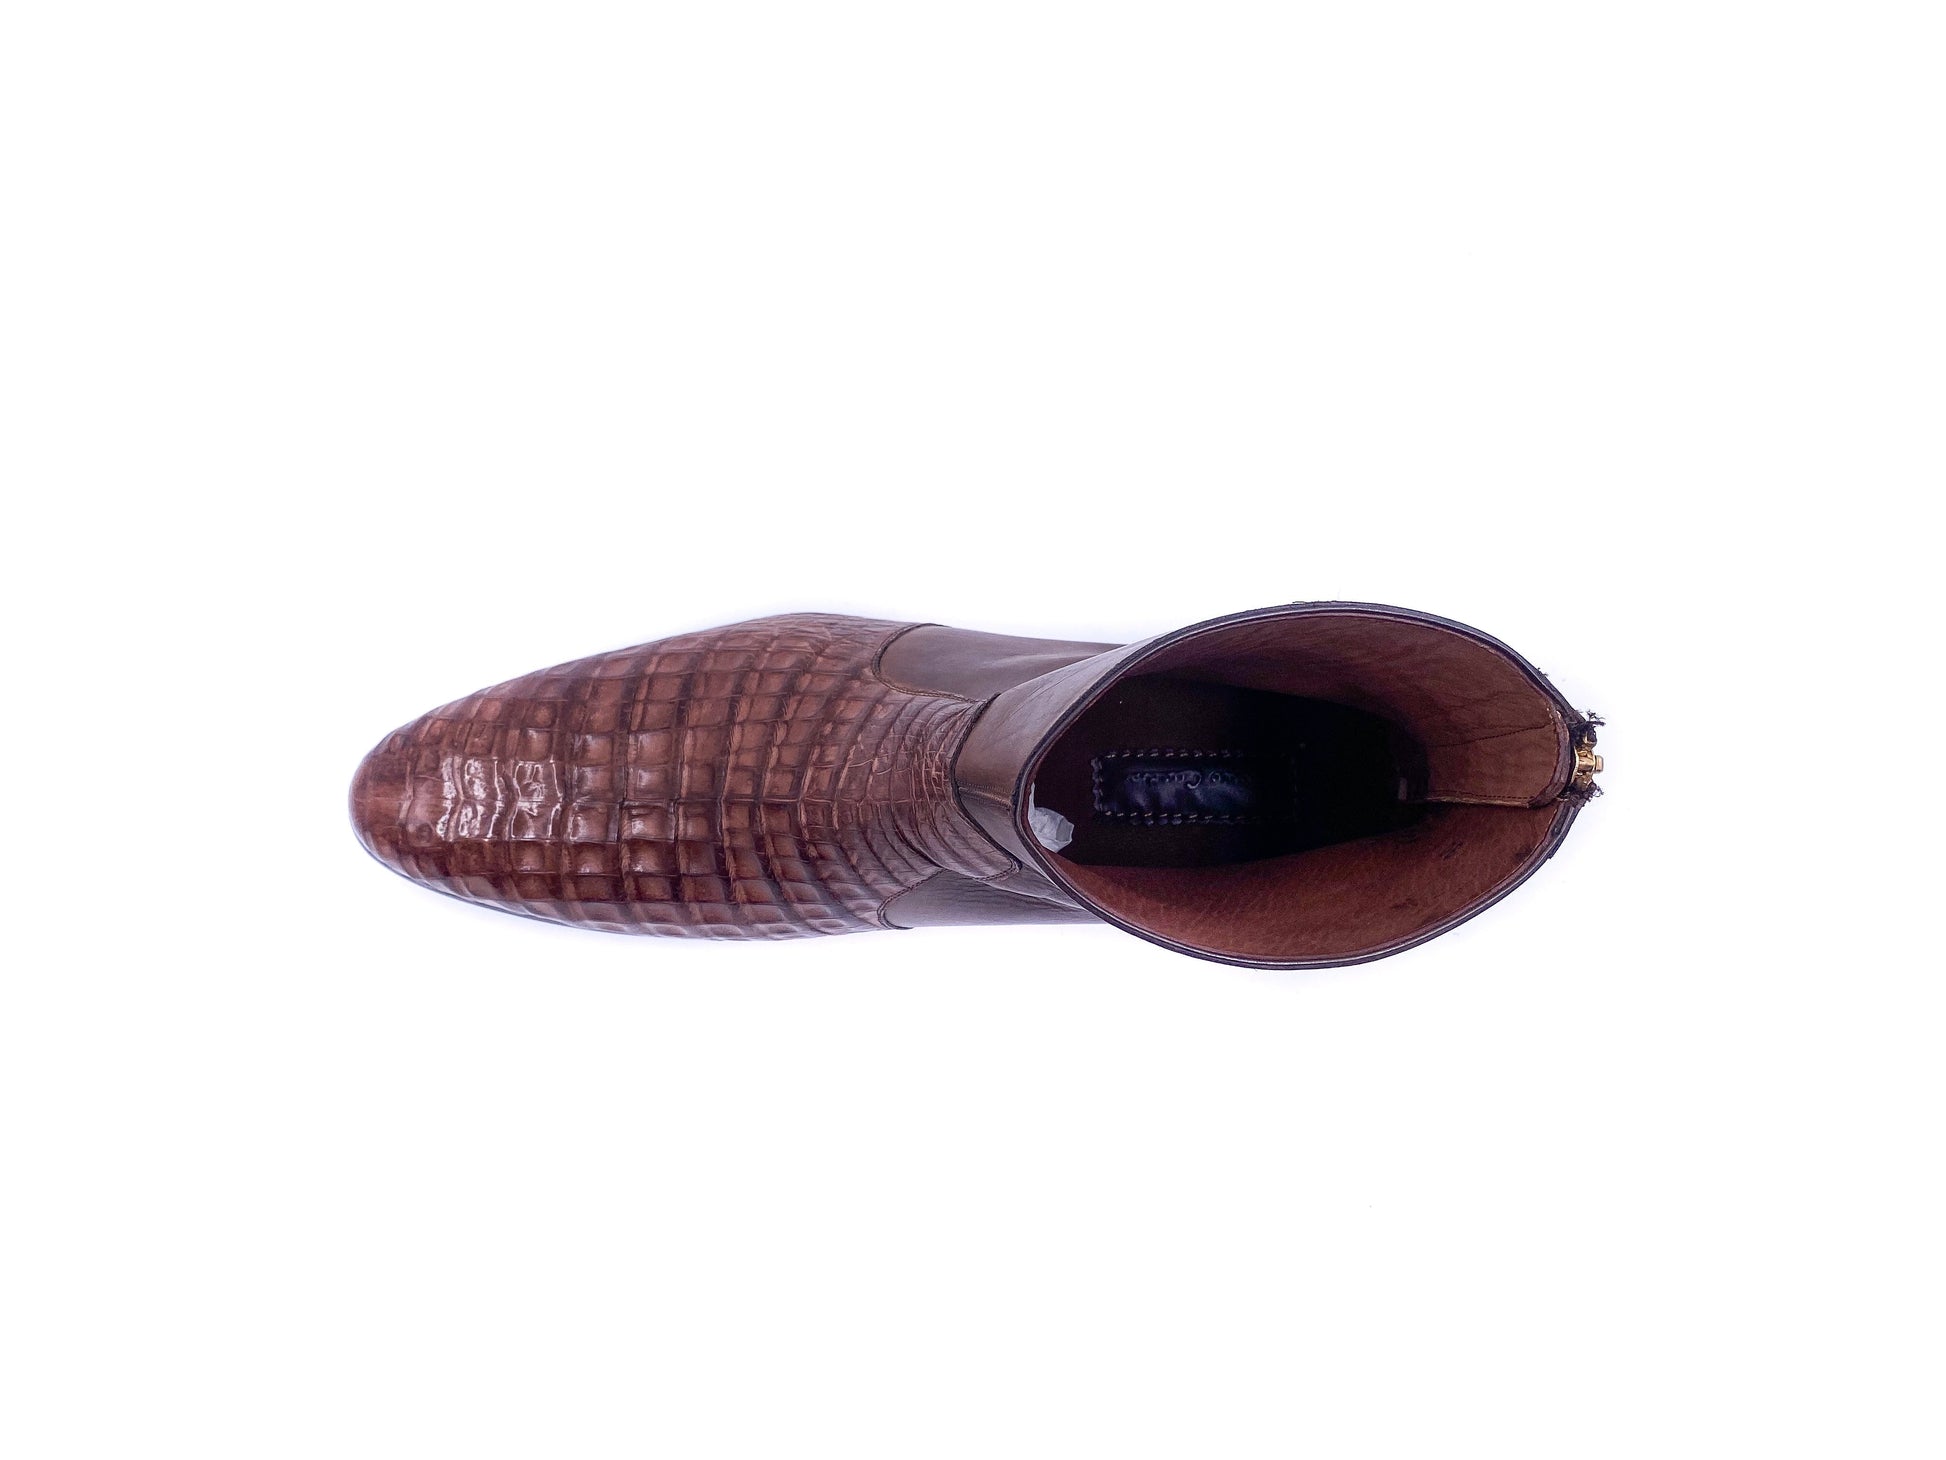 09ZFWBV - Cuadra maple casual fashion caiman ankle boots for men-Kuet.us